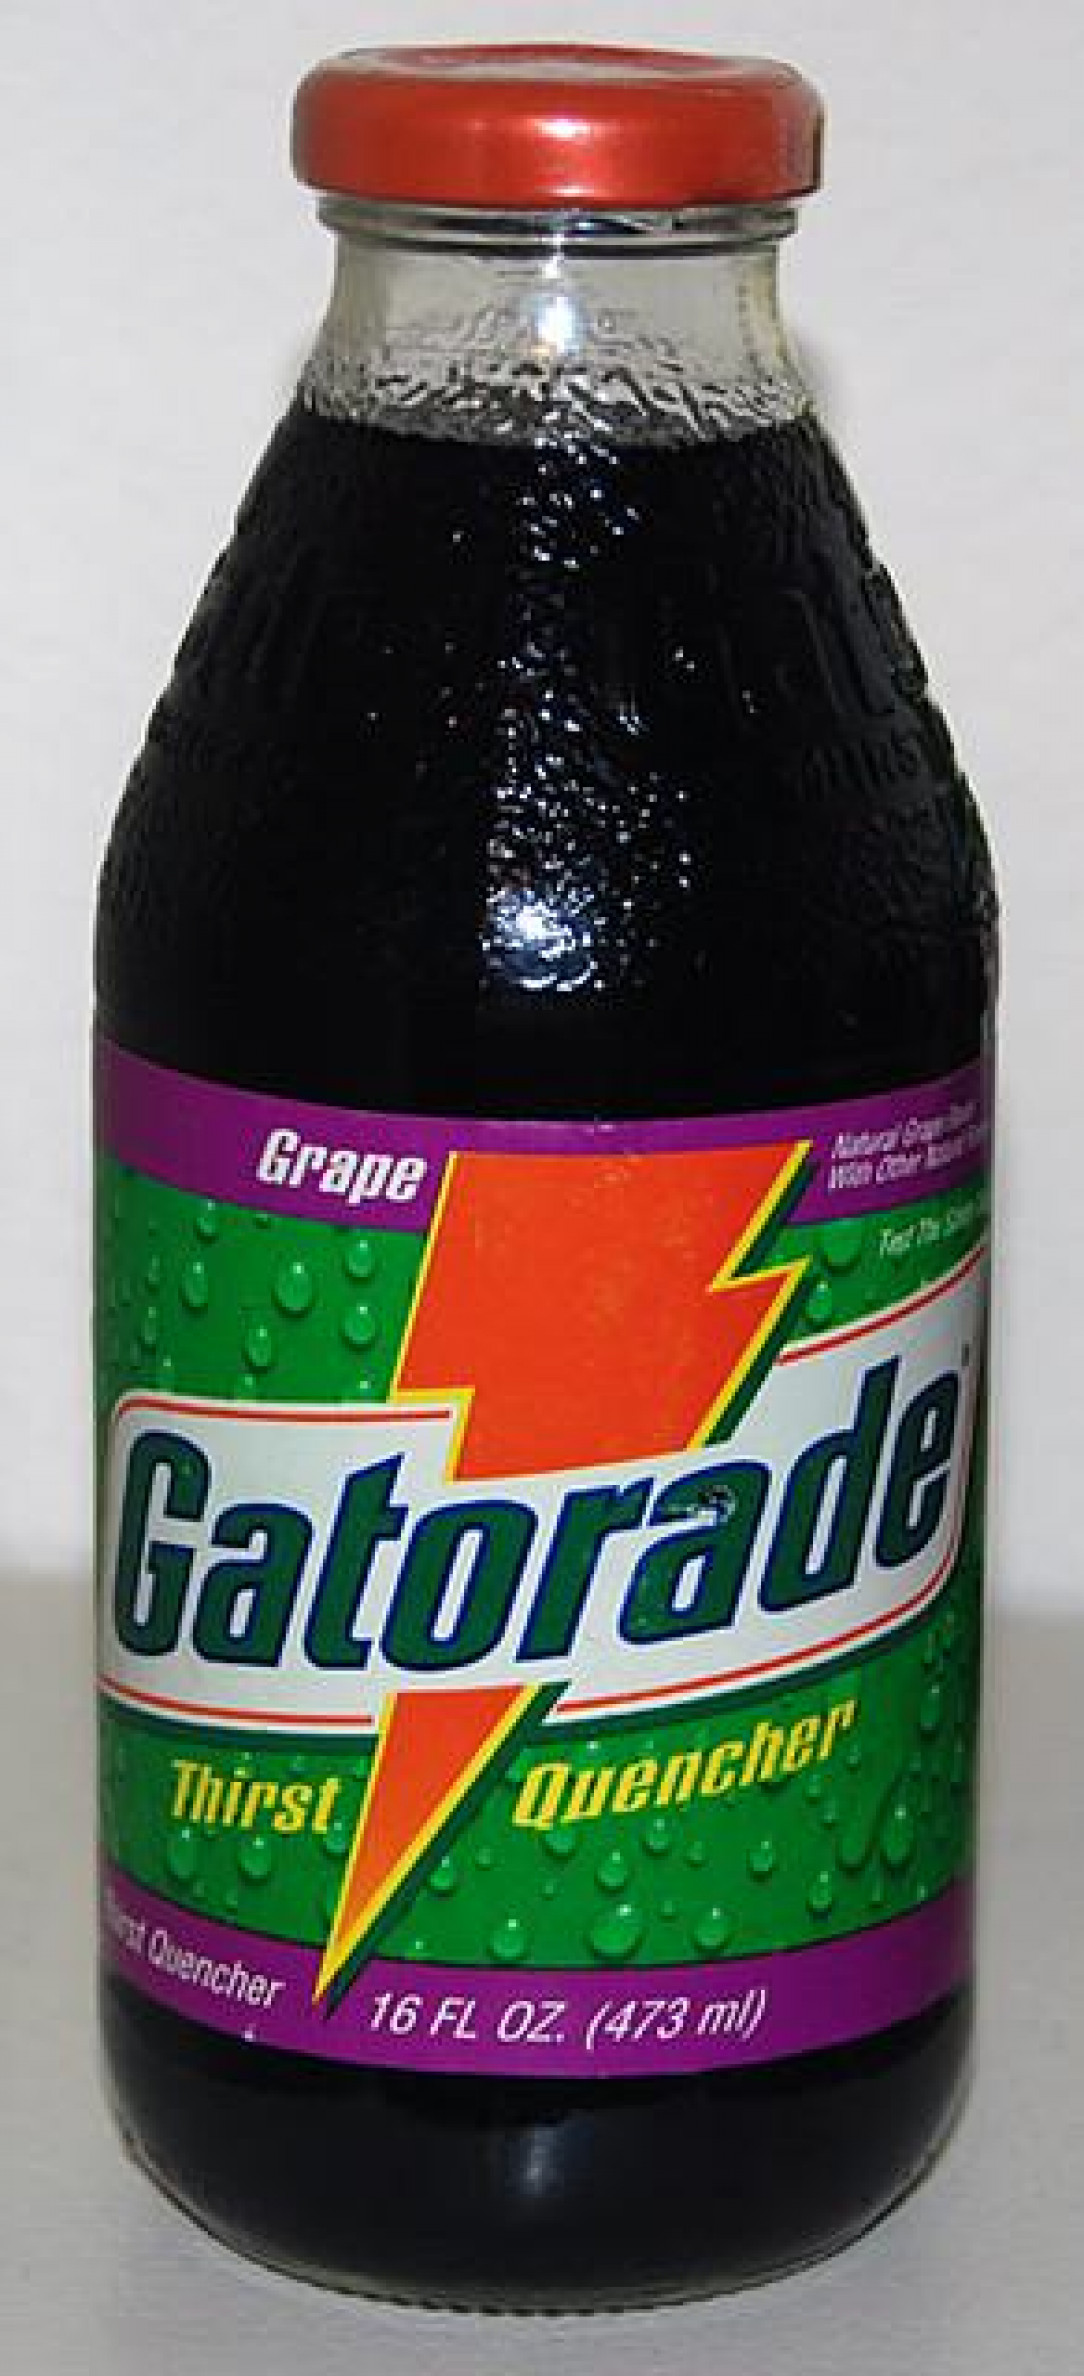 Does anyone remember glass Gatorade bottles?